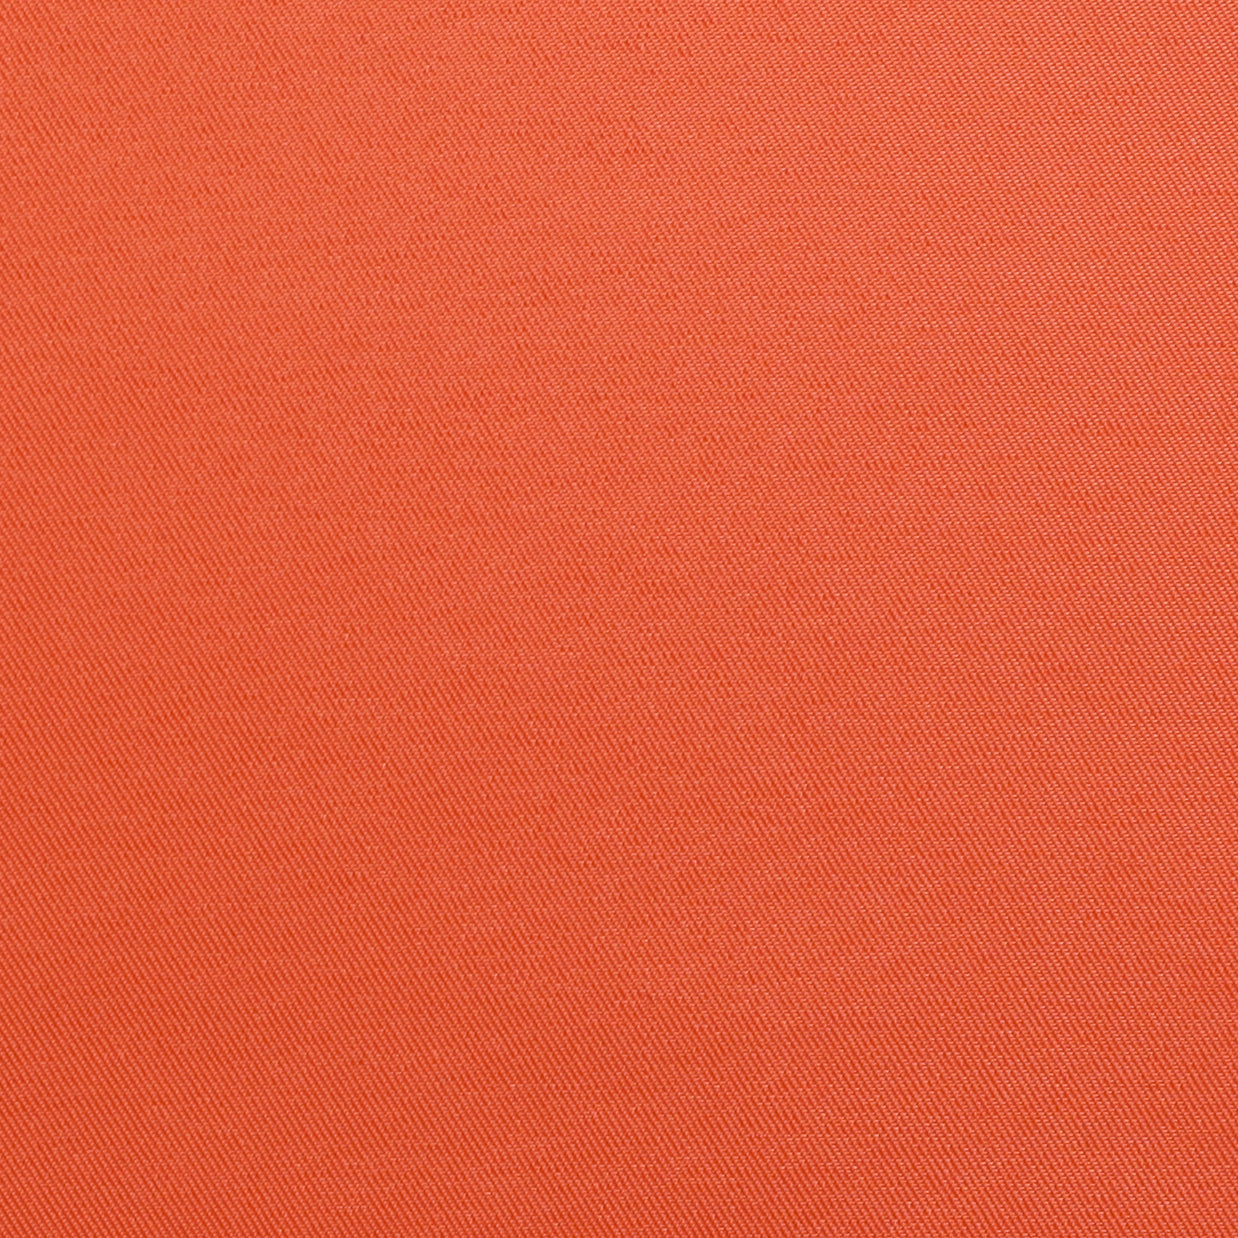 Lightweight Polyester Satin Twill in Rising Sun (Orange)